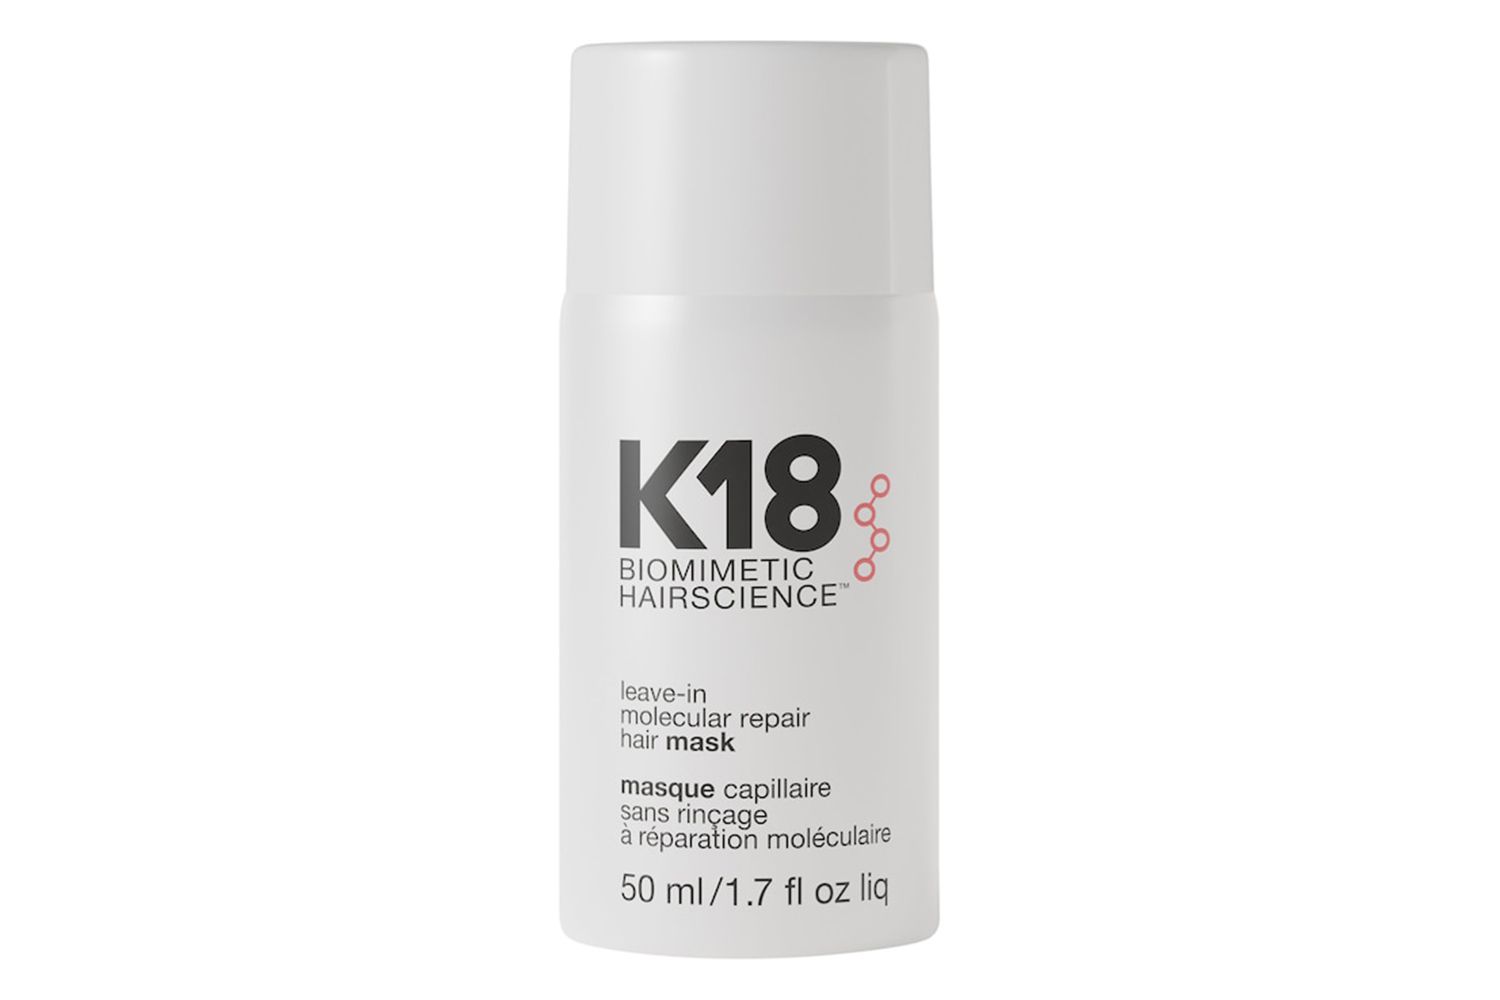 Sephora K18 Biomimetic Hairscience Leave-In Molecular Repair Hair Mask